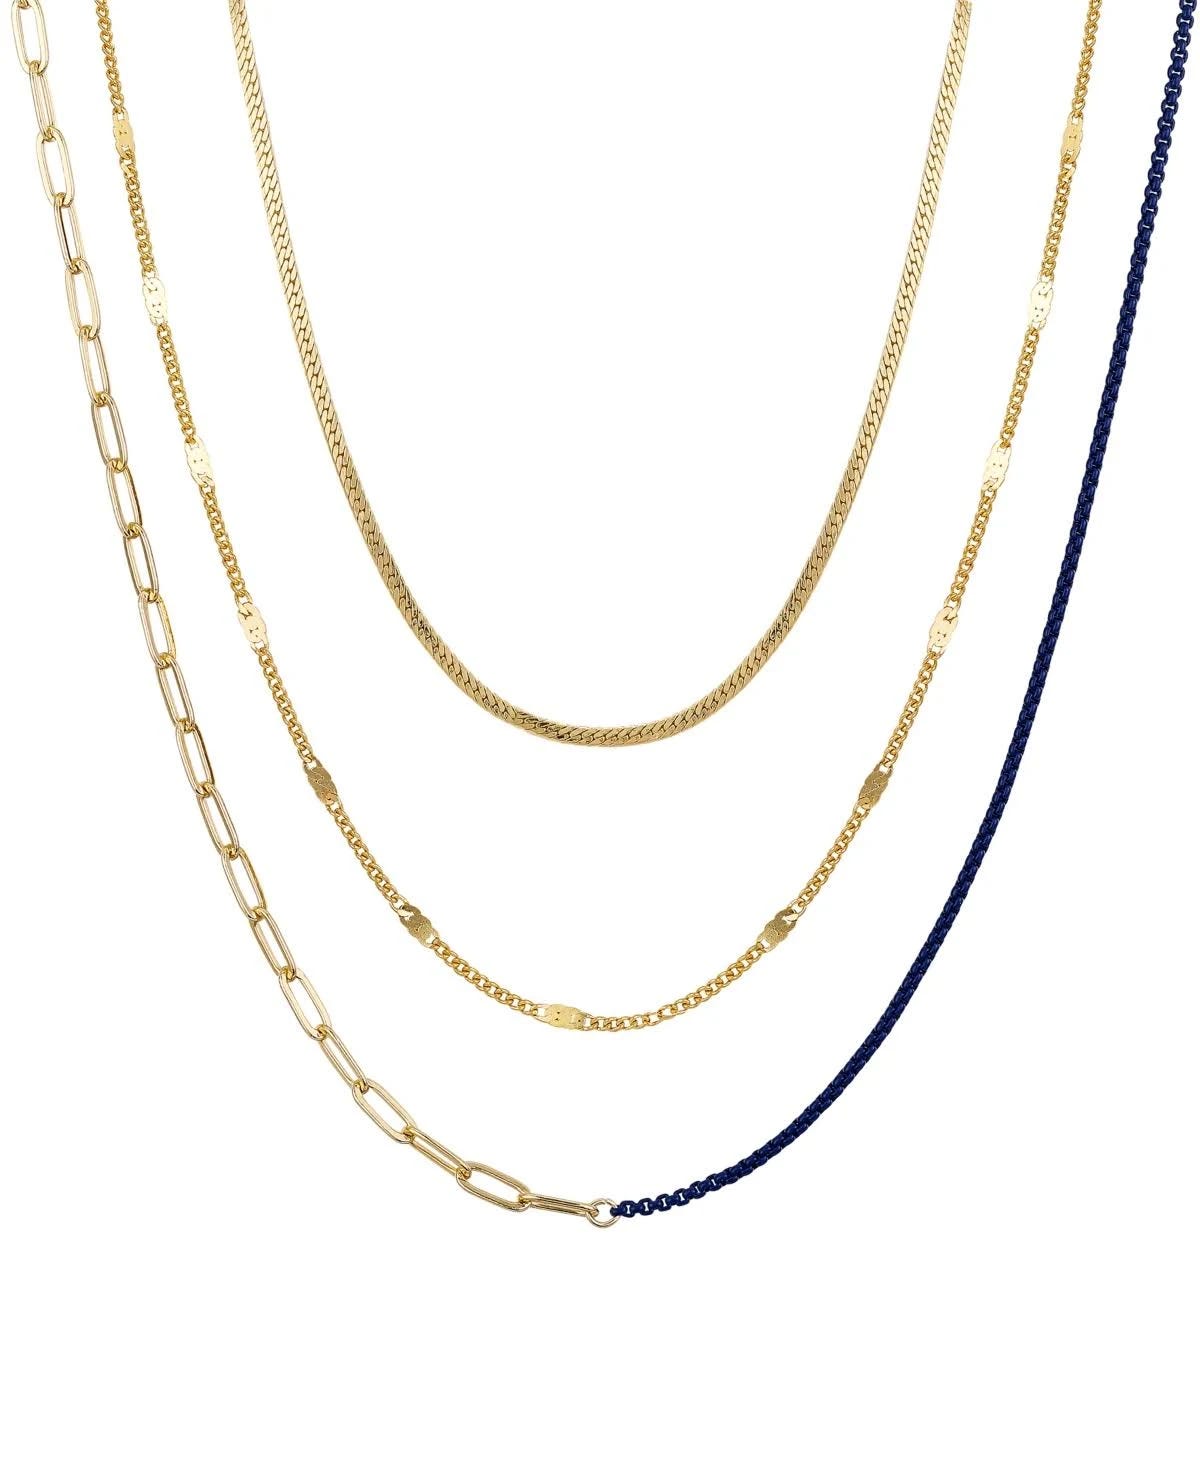 Elegant 3-Piece Layered Gold Necklace Set with Herringbone Chain | Image